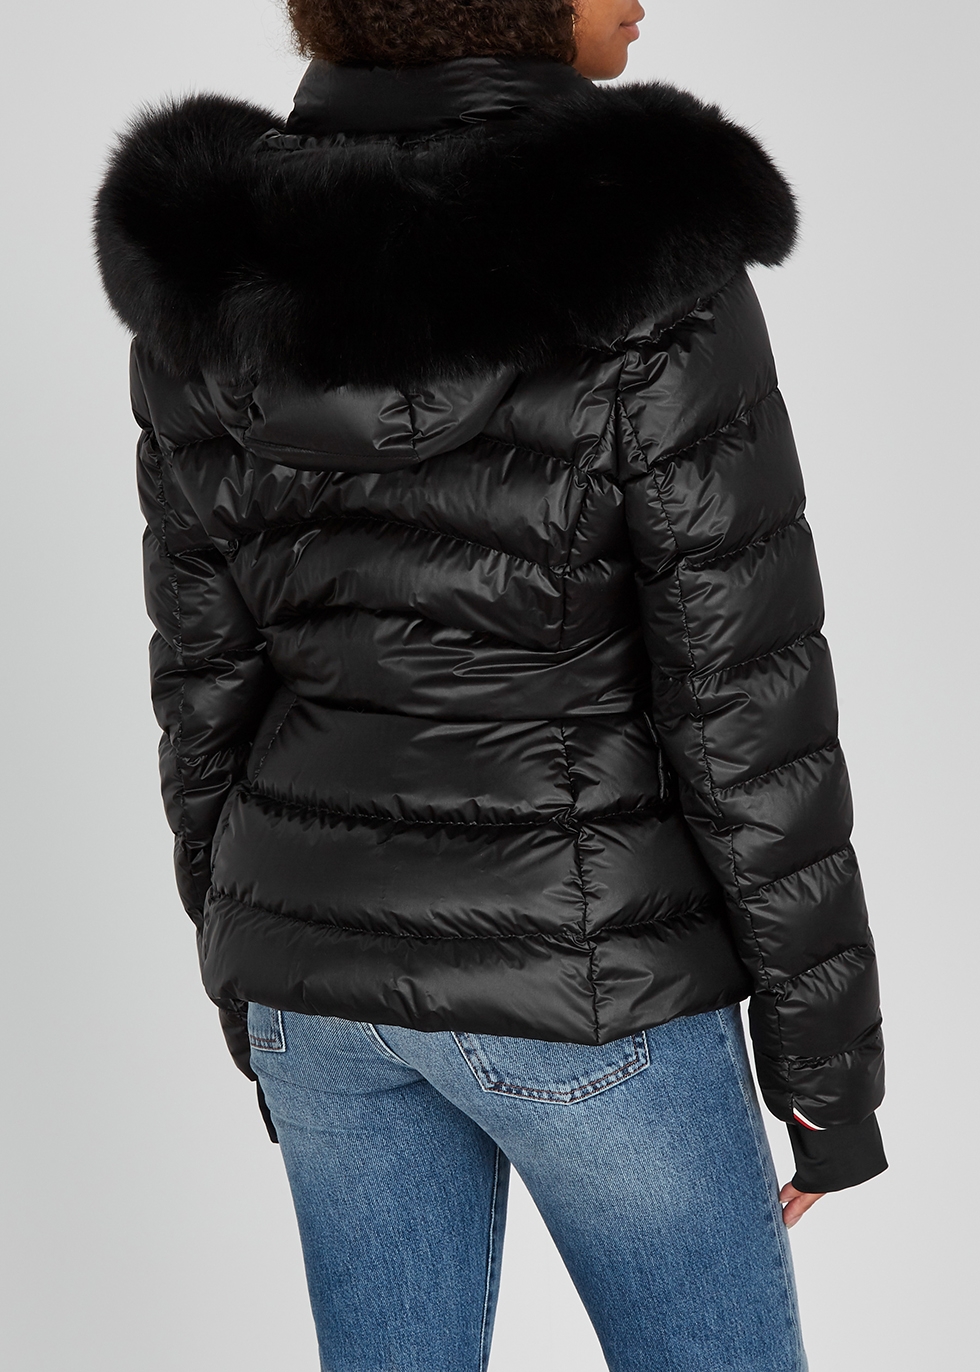 moncler jacket with fur